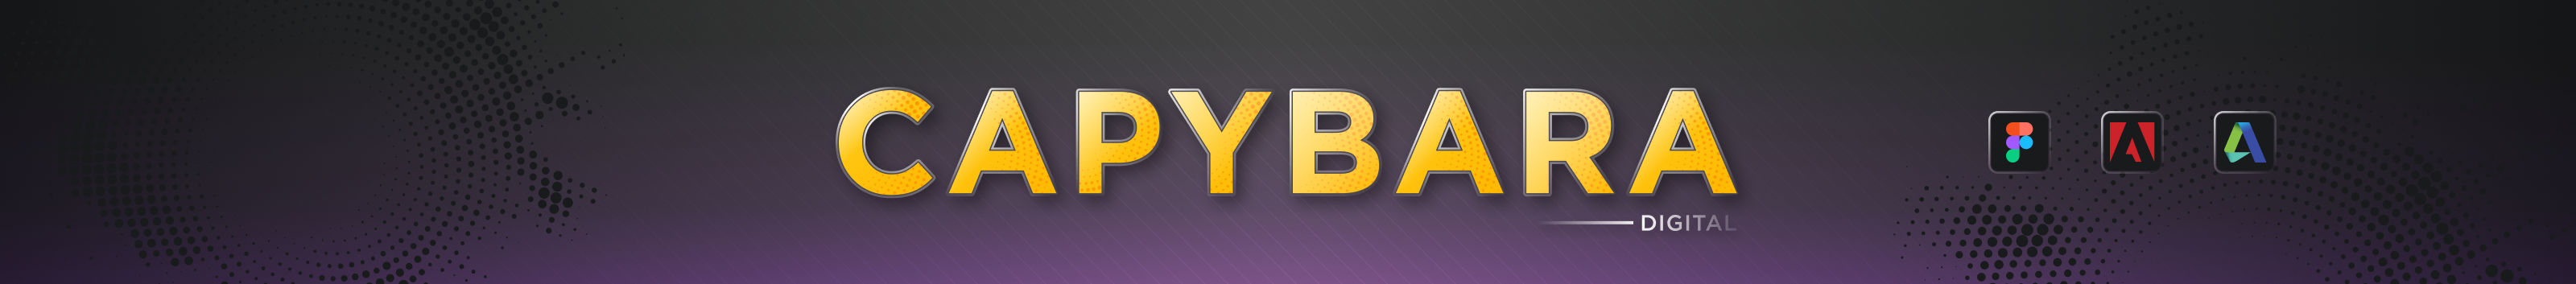 CAPYBARA DIGITAL's profile banner